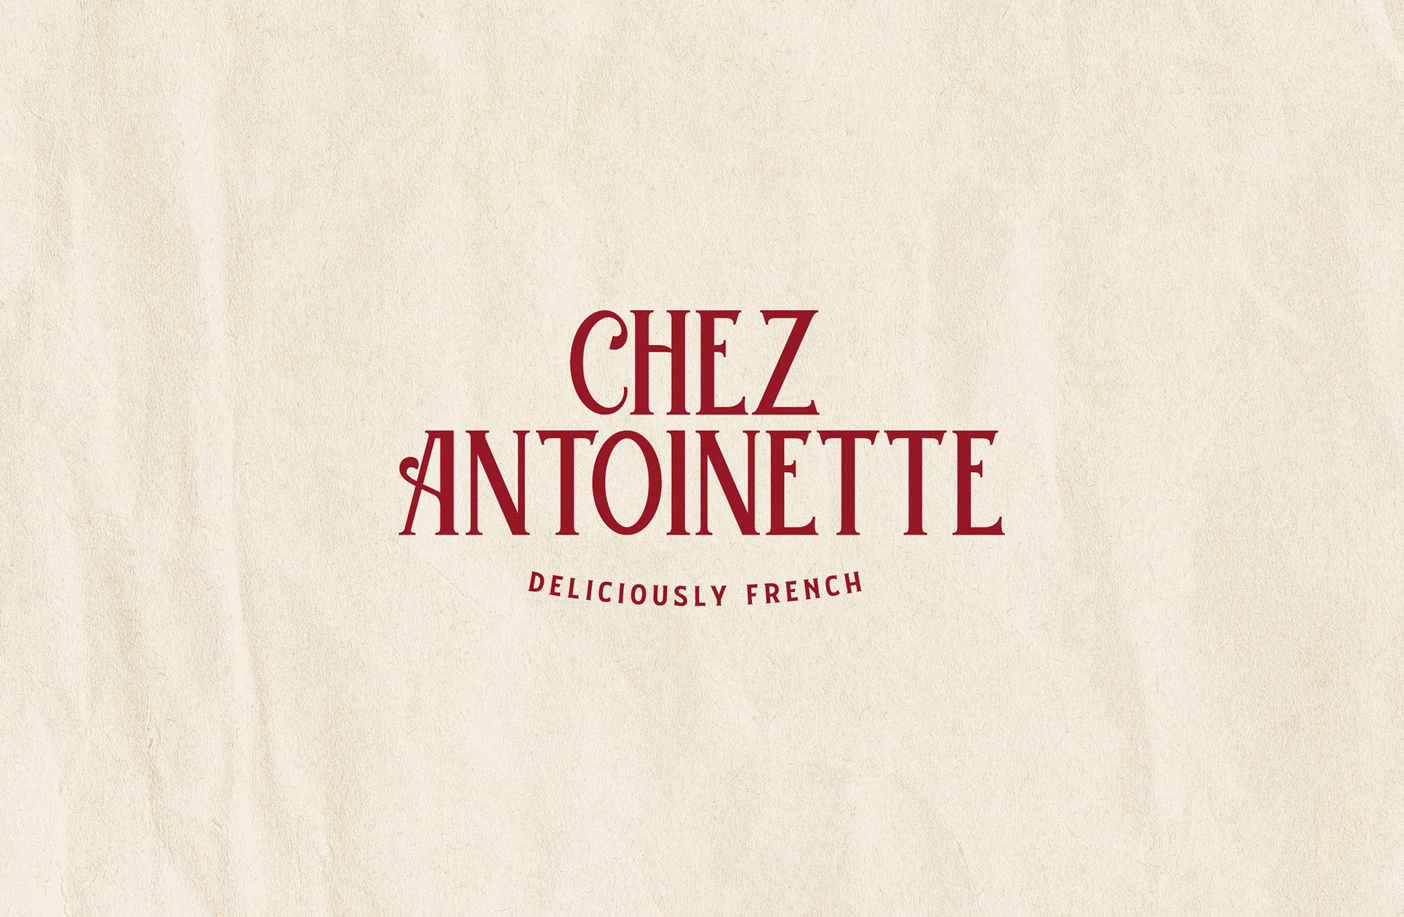 Nicolas Lavrov Studio Re-Brand For the Deliciously French Restaurant Chez Antoinette